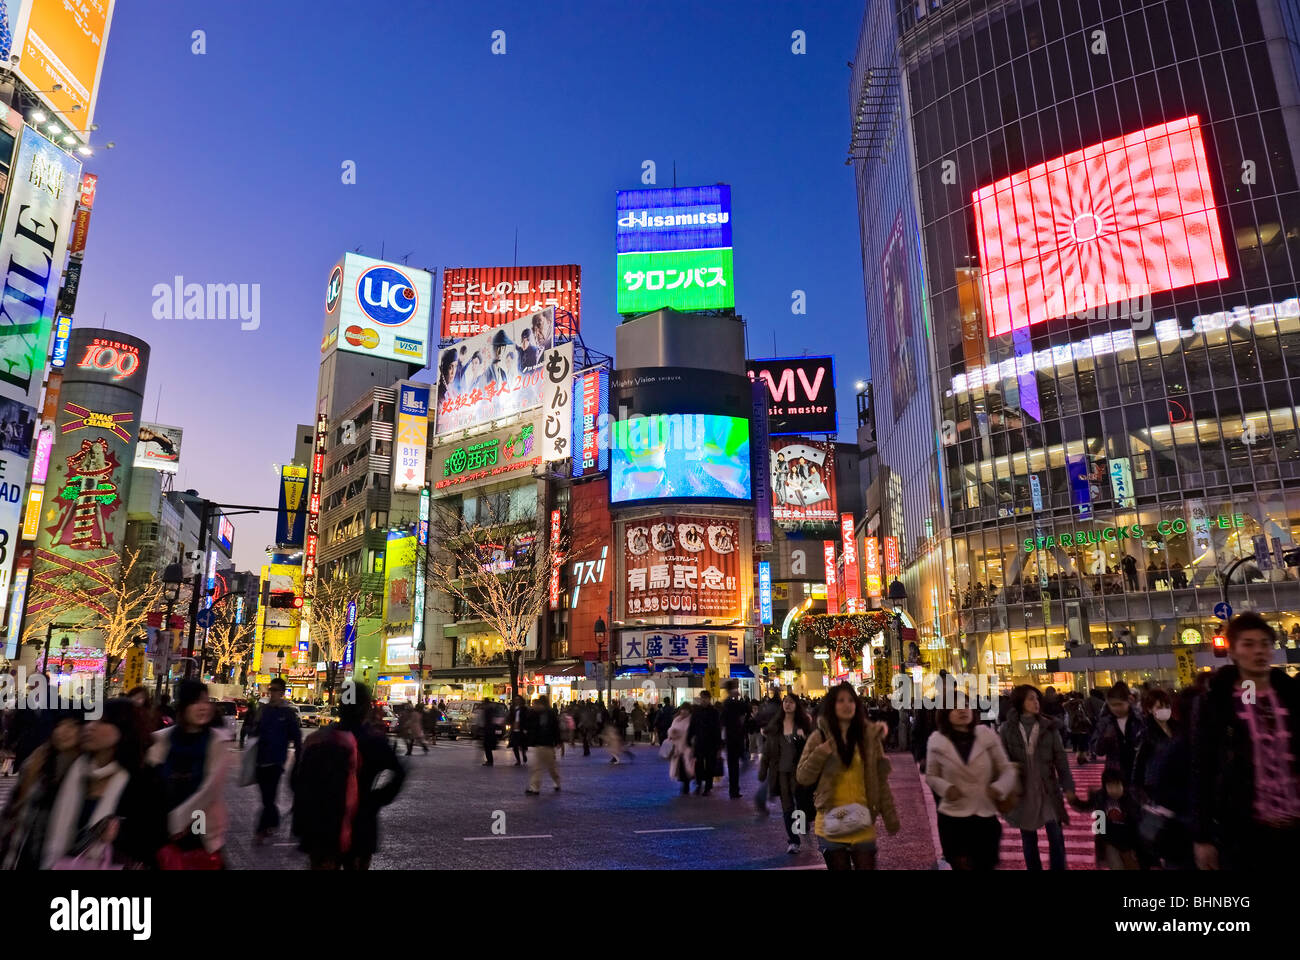 Tokyo Shibuya Crossing, Hachiko Square, Japan, Neon Advertising Billboards. Stock Photo